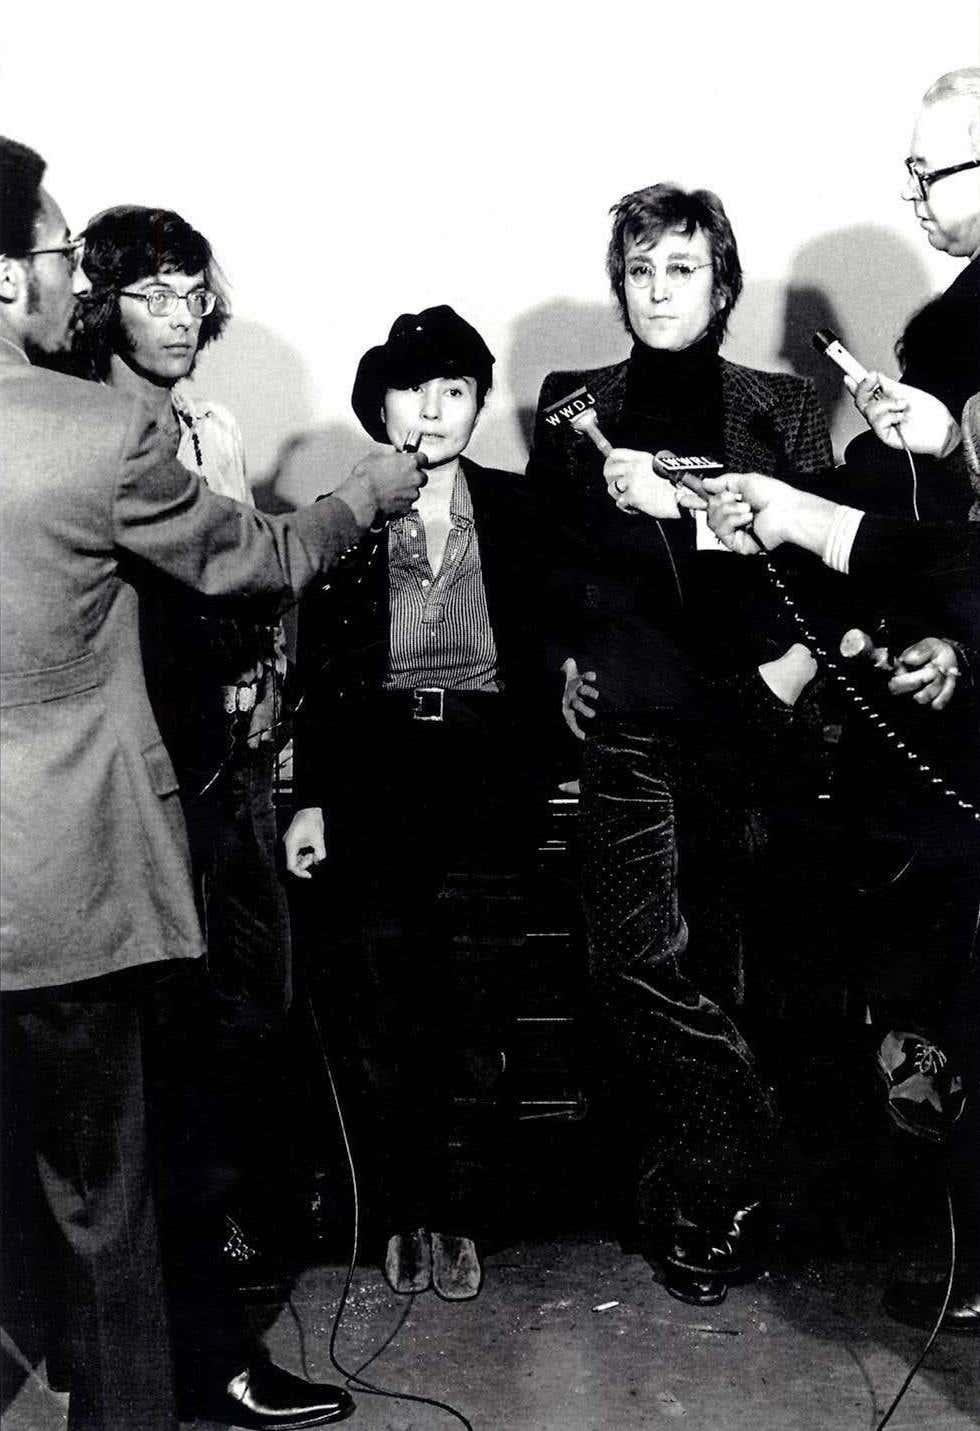 John Lennon photograph Detroit 1970s (John & Yoko) - Photograph by Leni Sinclair